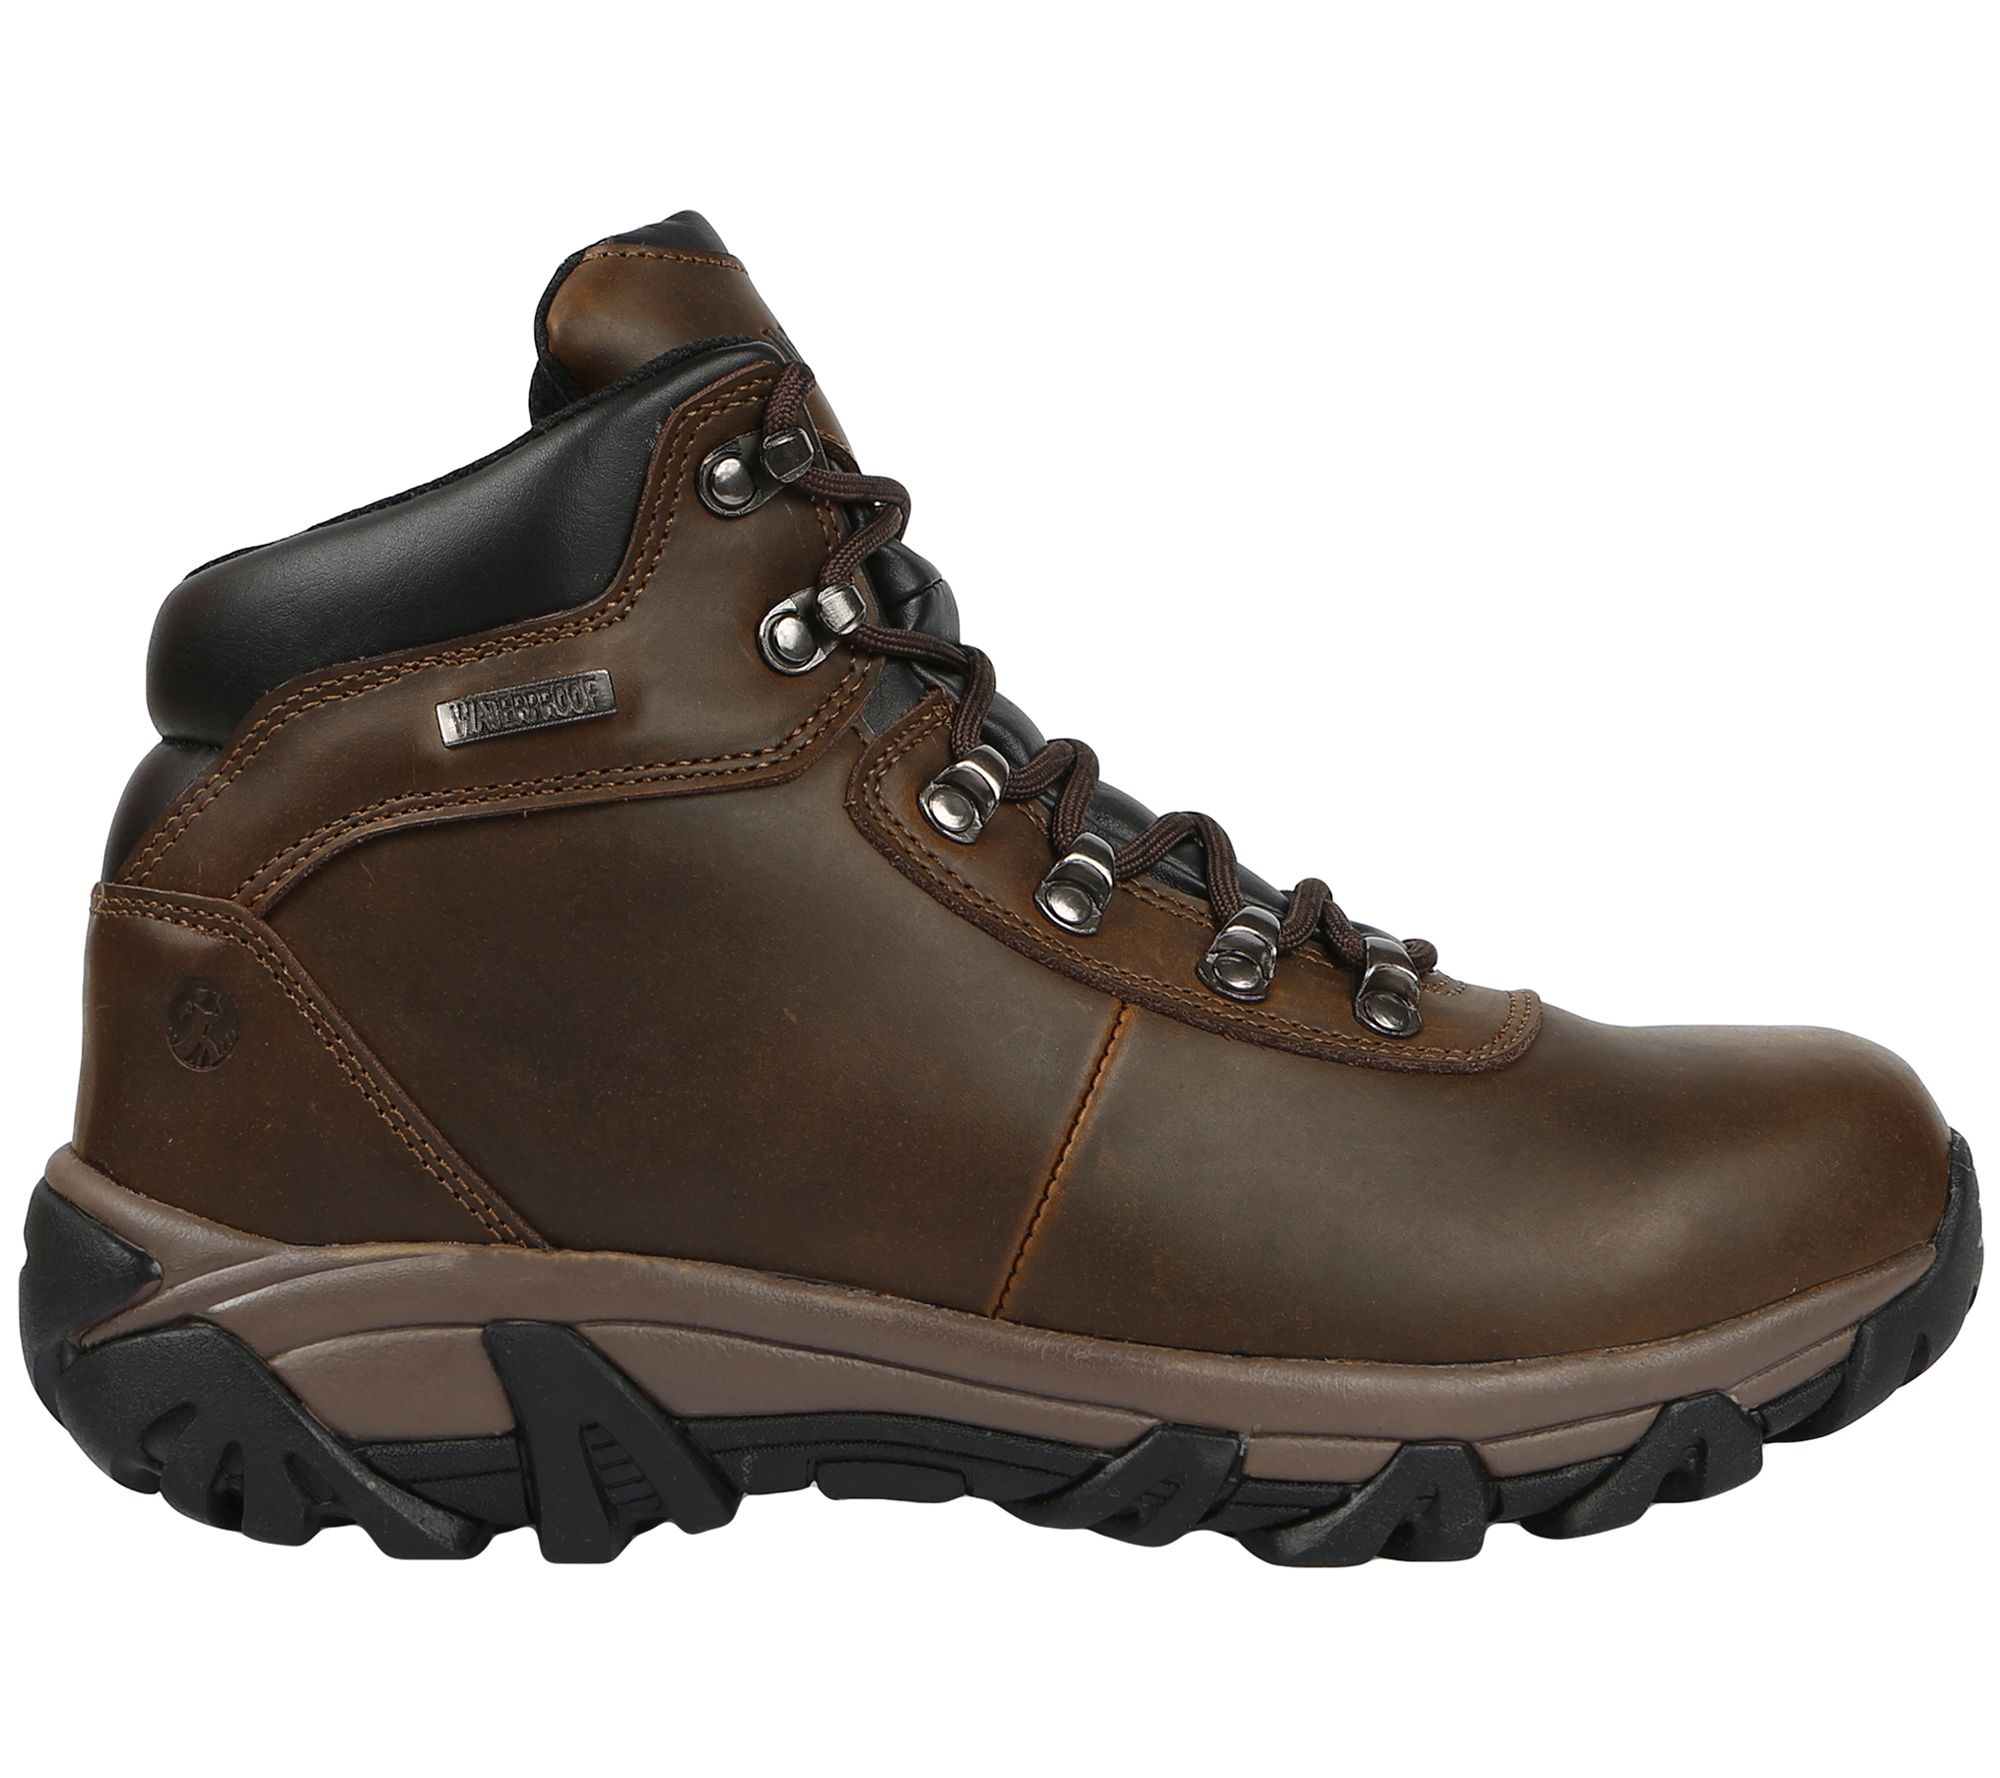 Northside Men's Mid Waterproof Hiking Boots - V ista Ridge - QVC.com